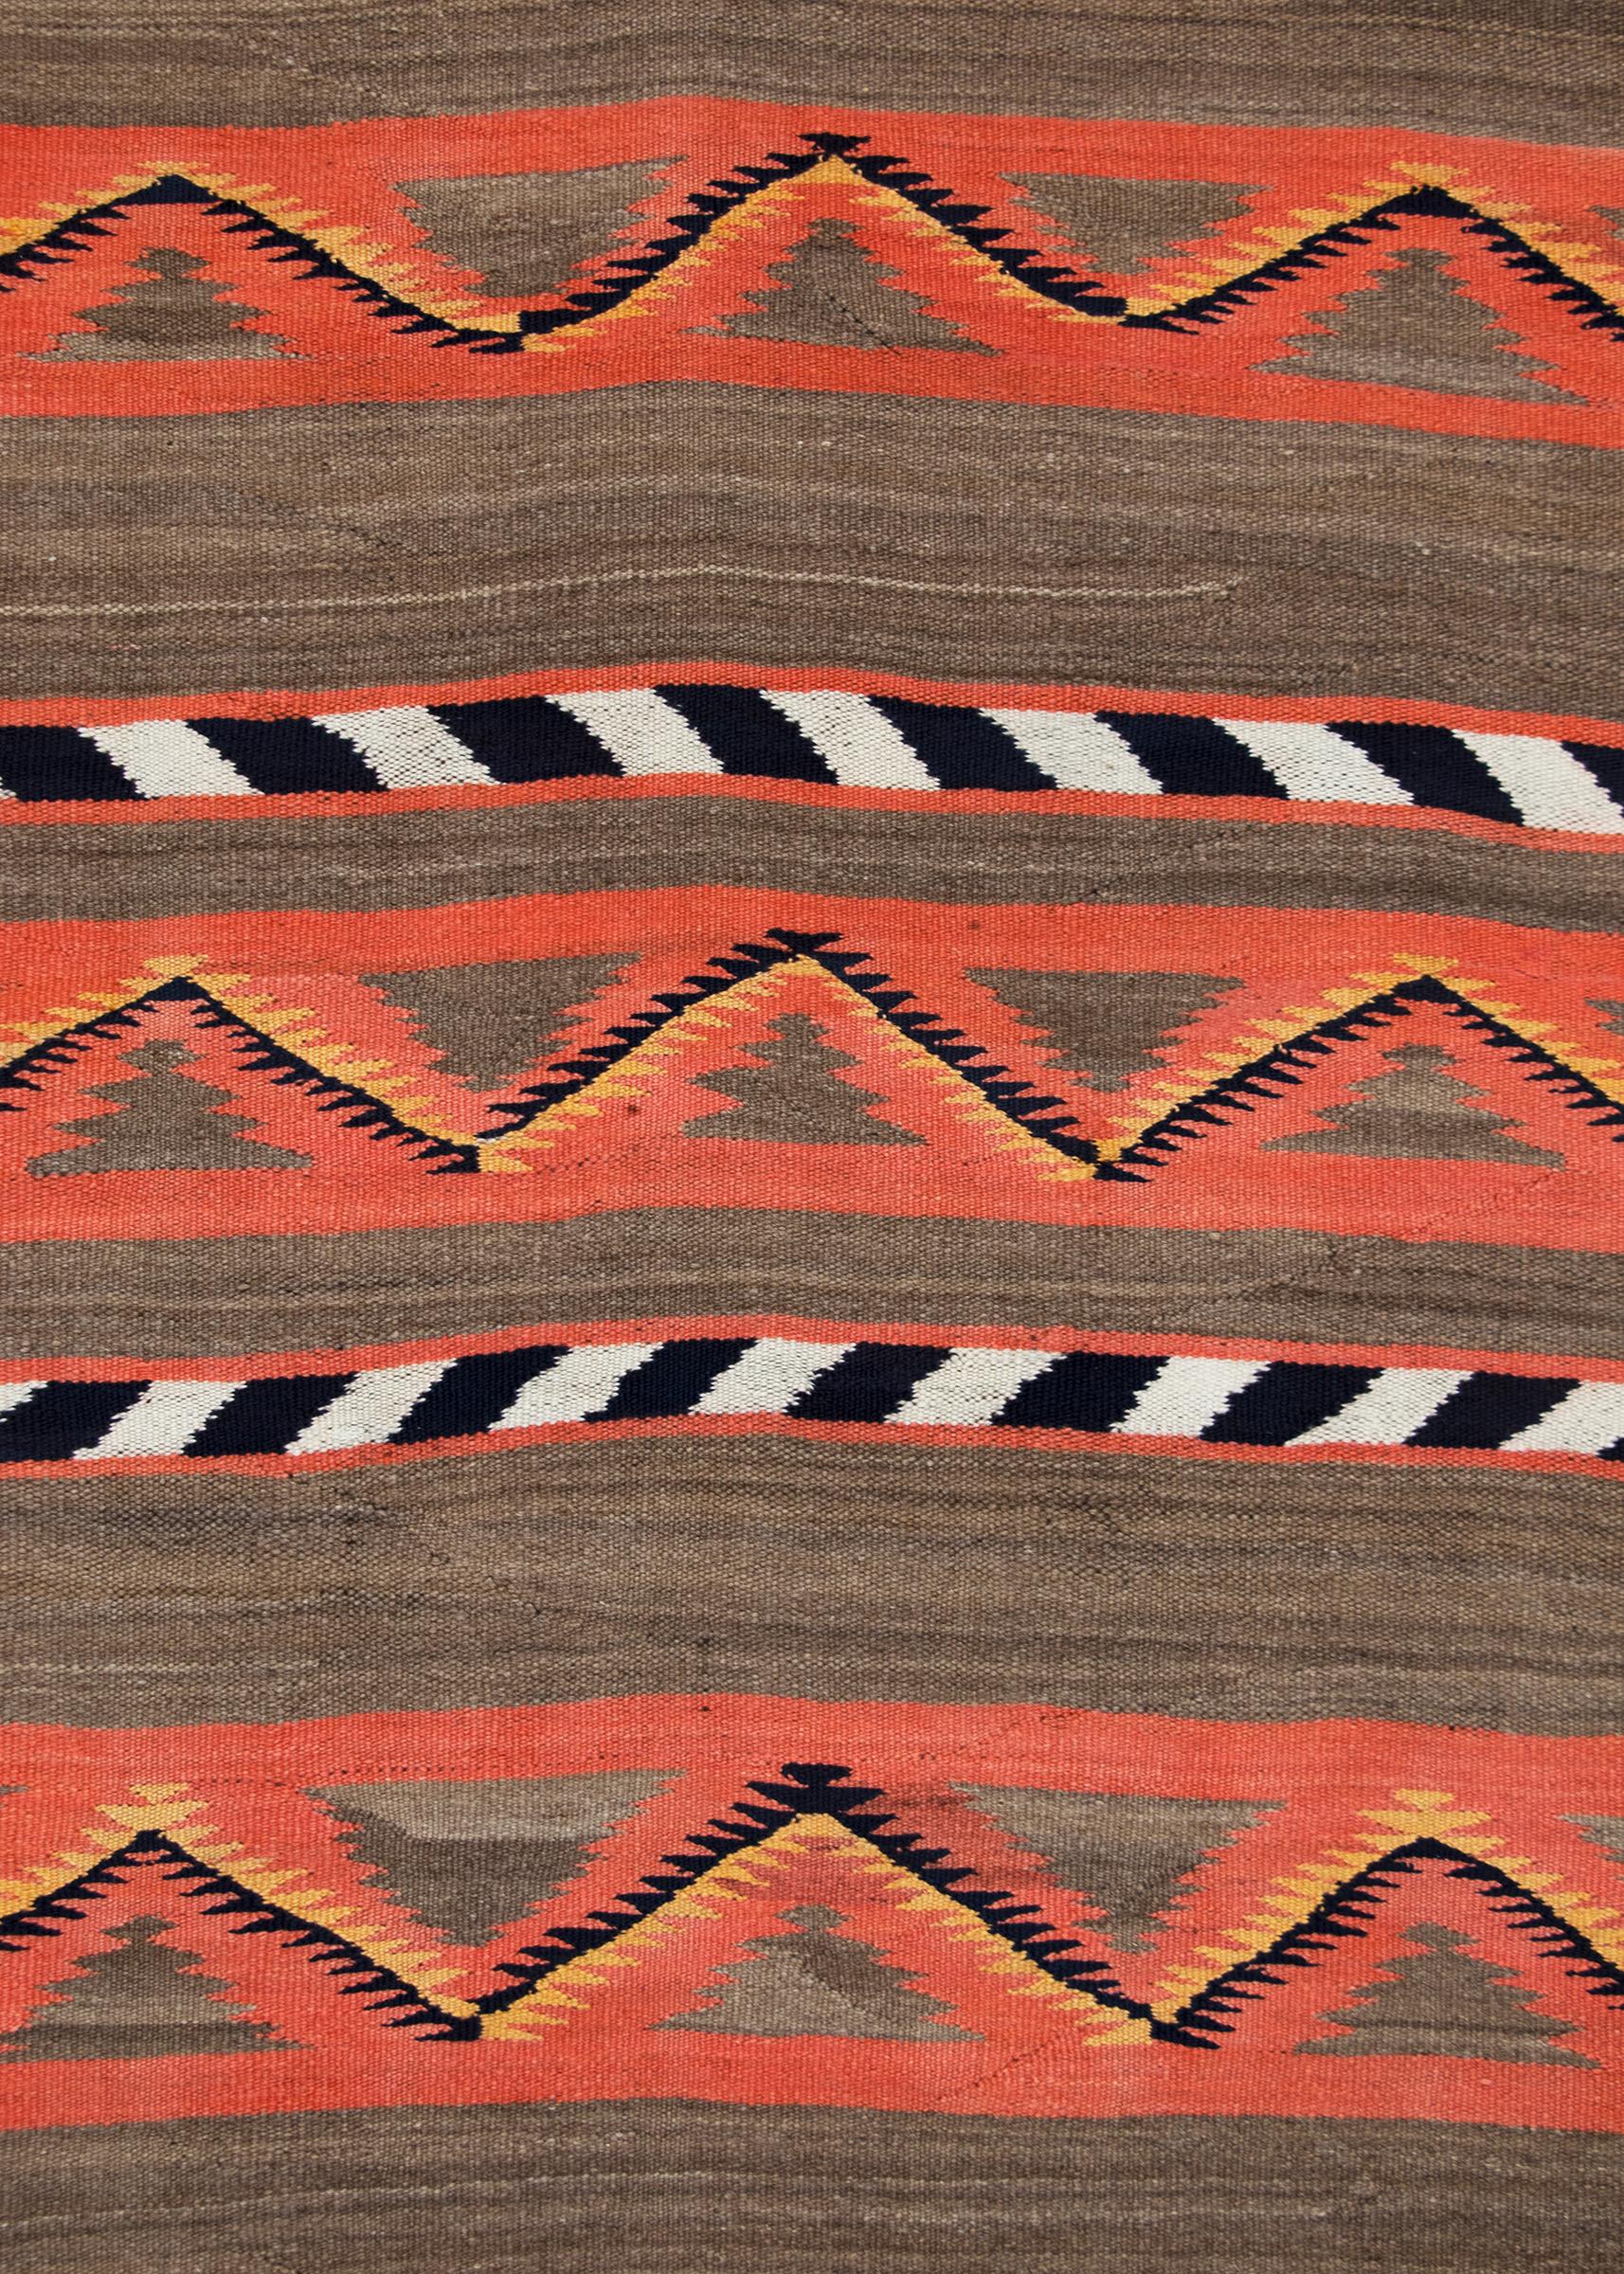 American Vintage Navajo Banded Wool Serape Style Blanket, 19th Century, circa 1880-1900